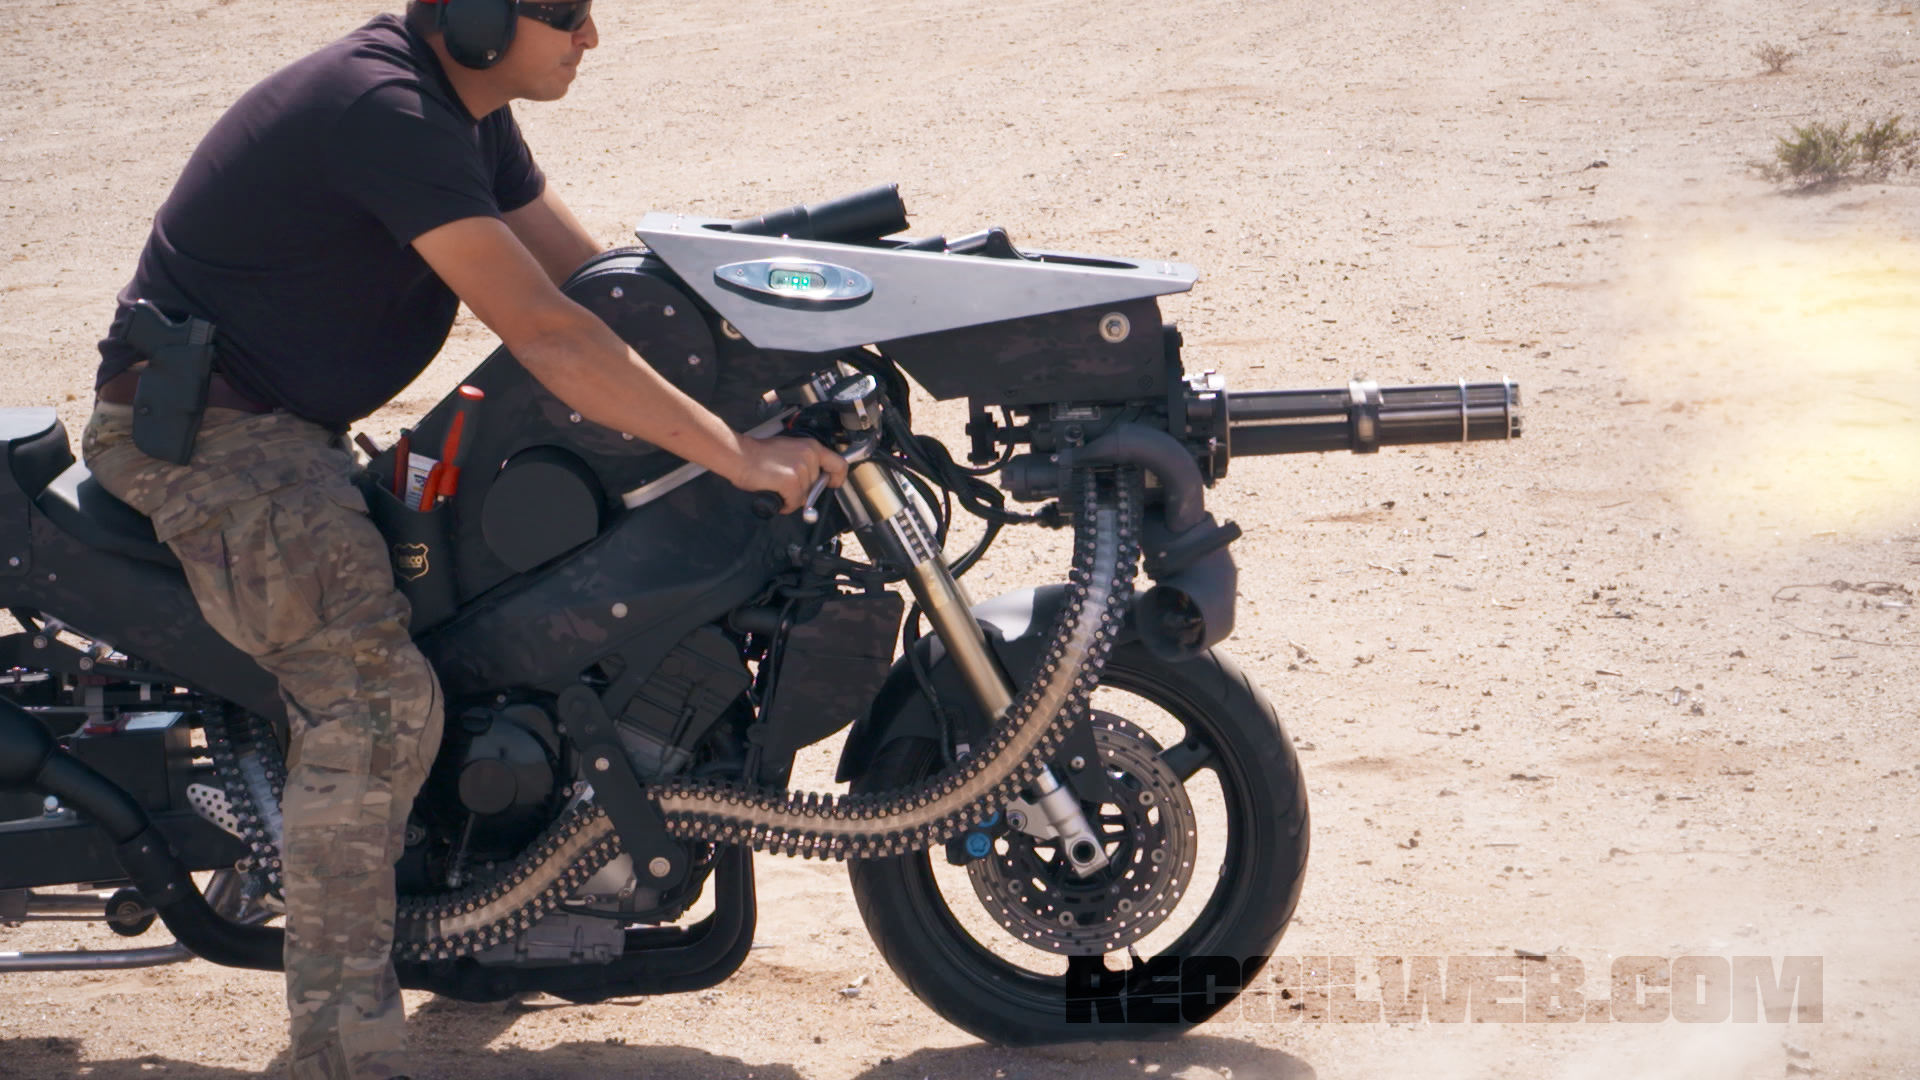 minigun-motorcycle1.jpg